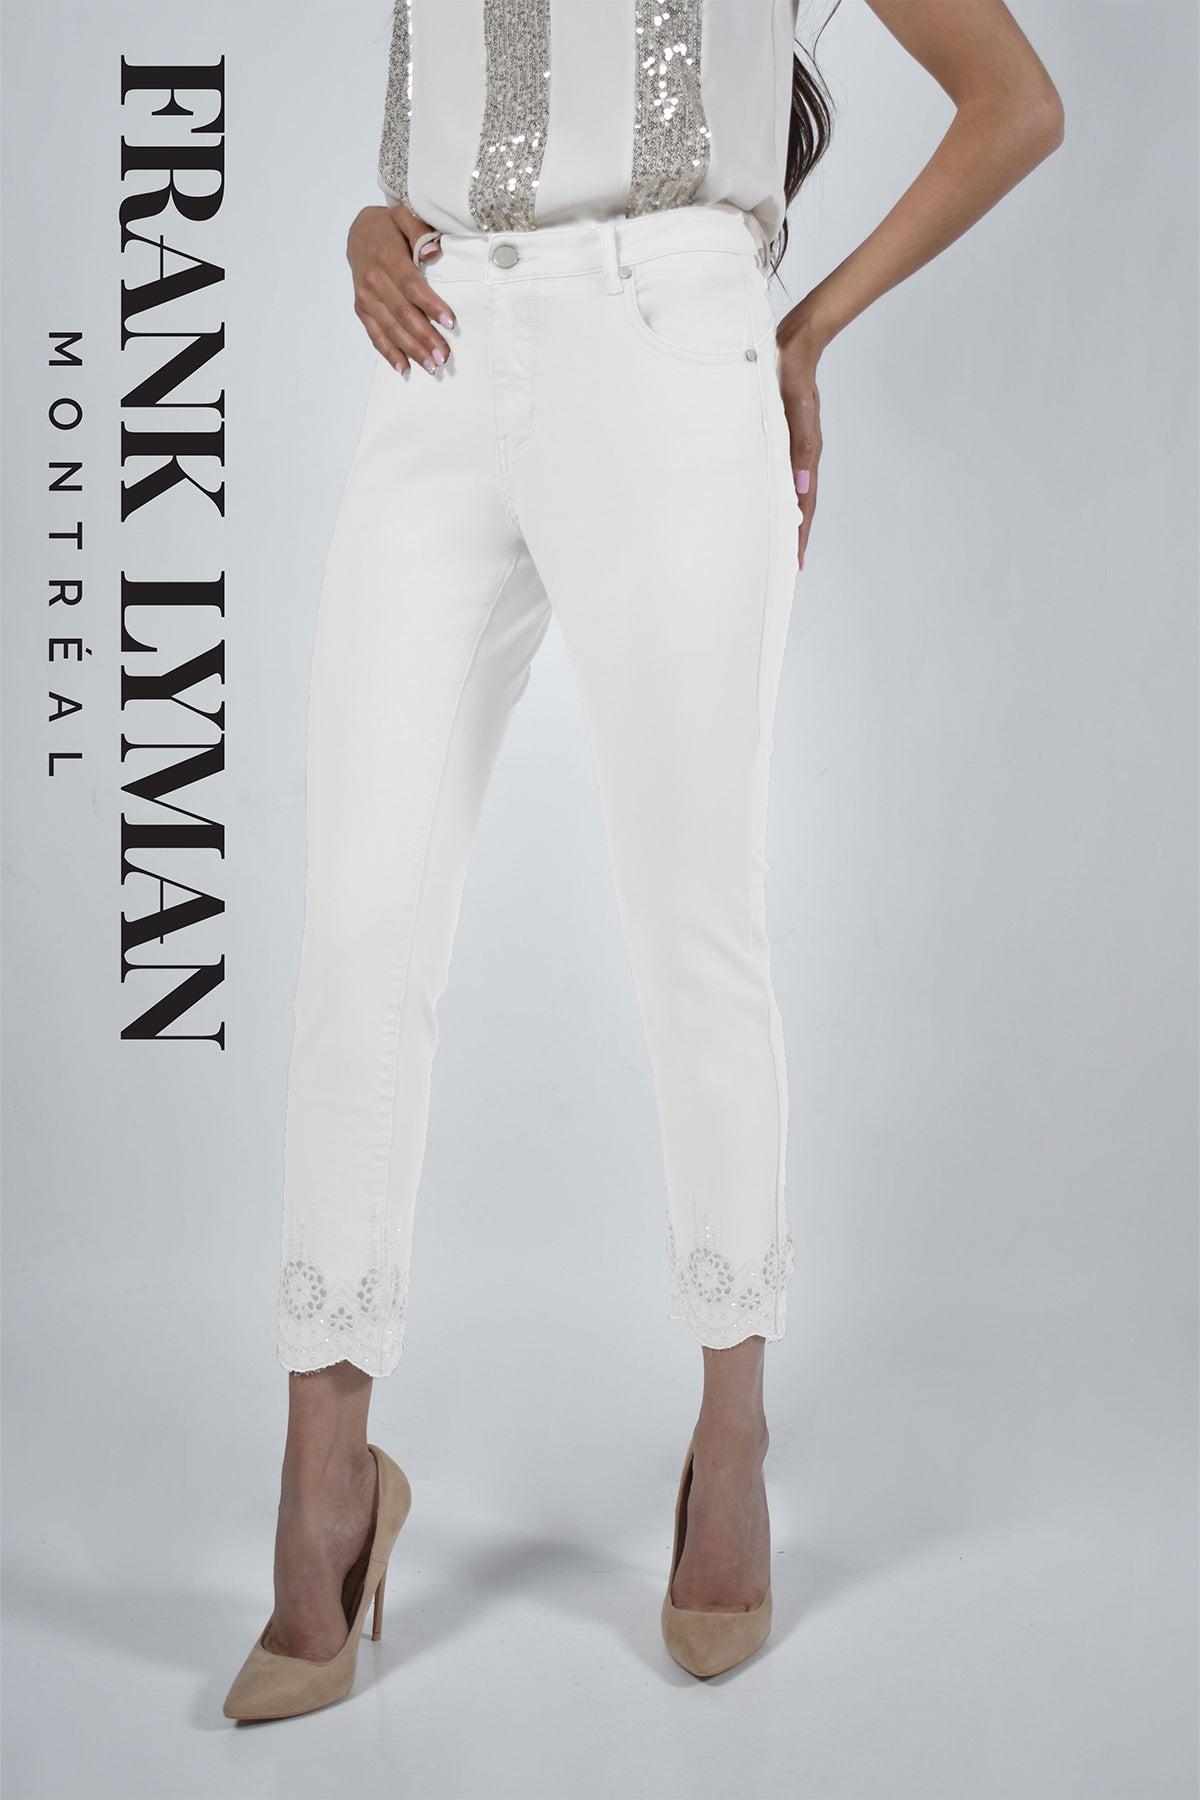 Frank Lyman Montreal Jeans-Buy Frank Lyman Montreal Jeans Online-Frank Lyman Montreal White Jeans-Frank Lyman Montreal Spring 2022-Frank Lyman Montreal Online Shop